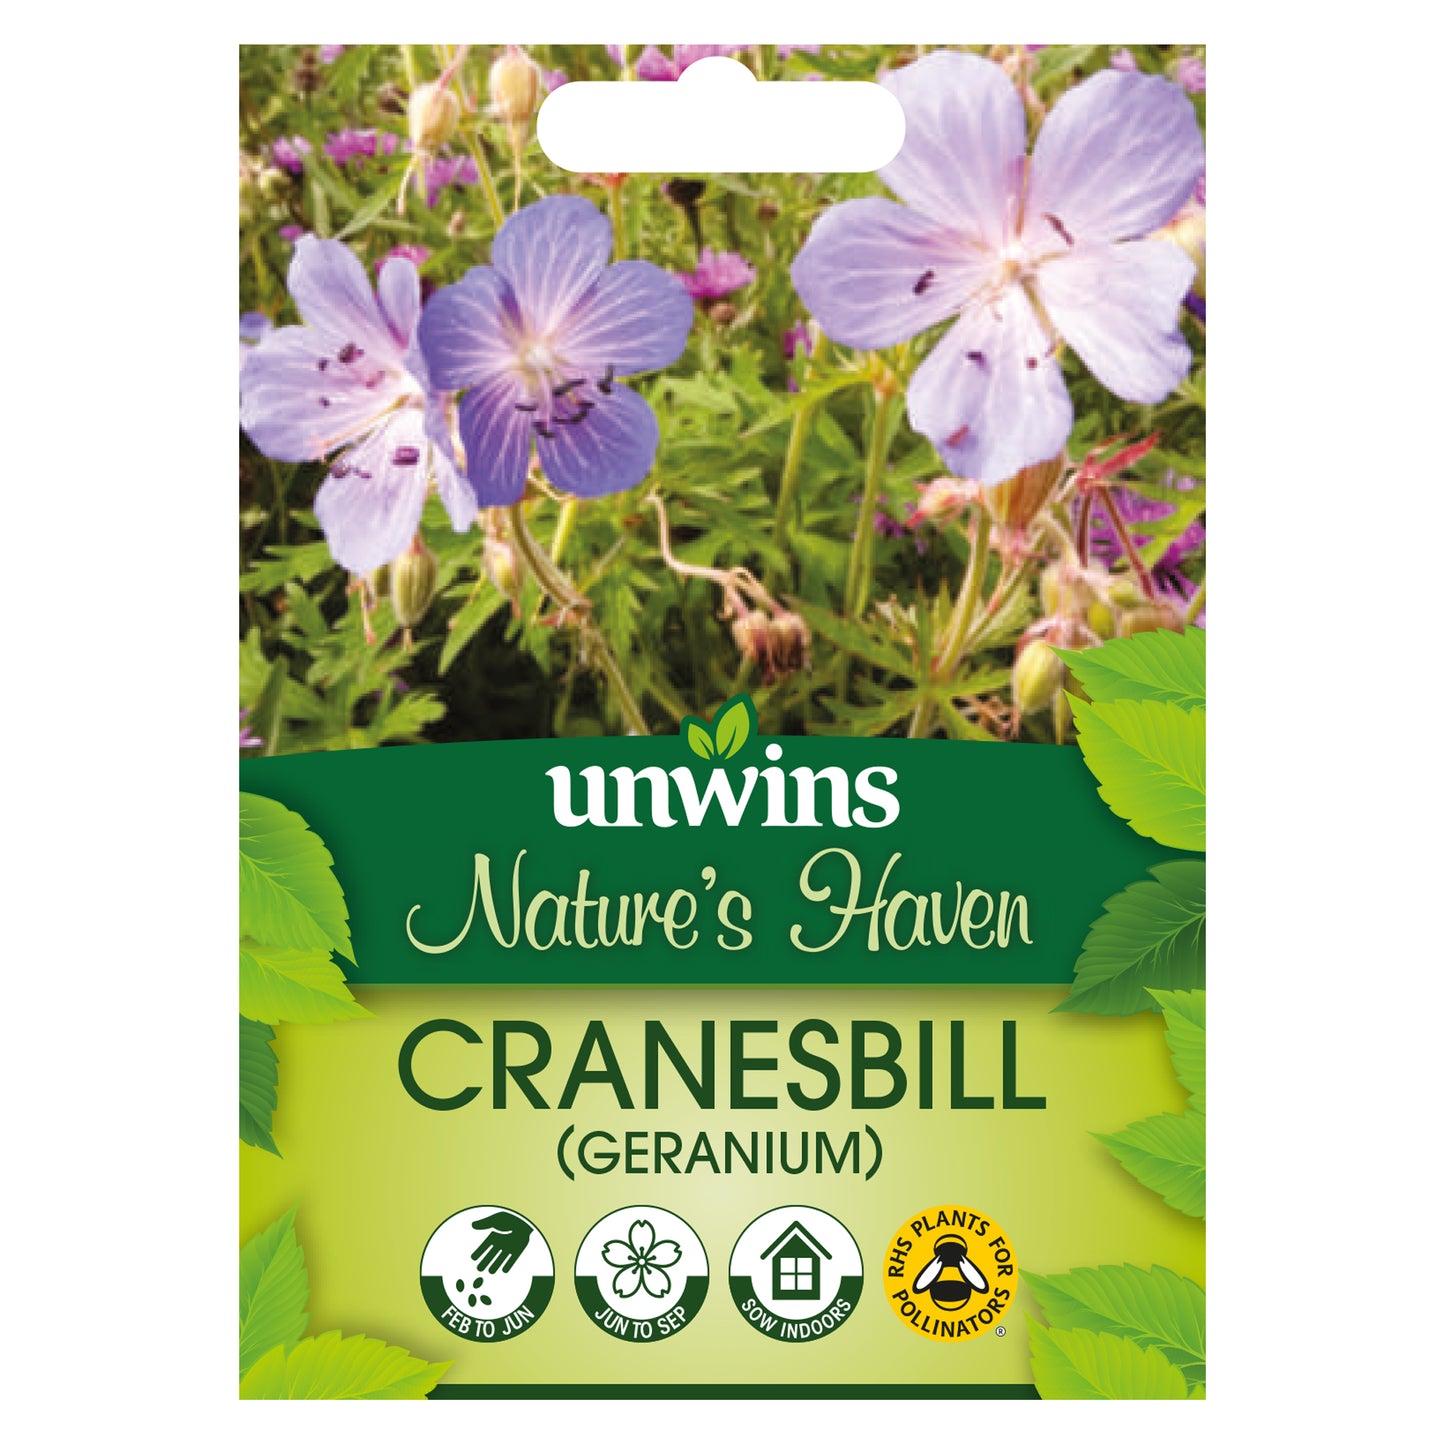 Nature's Haven Cranesbill Geranium Seeds Front